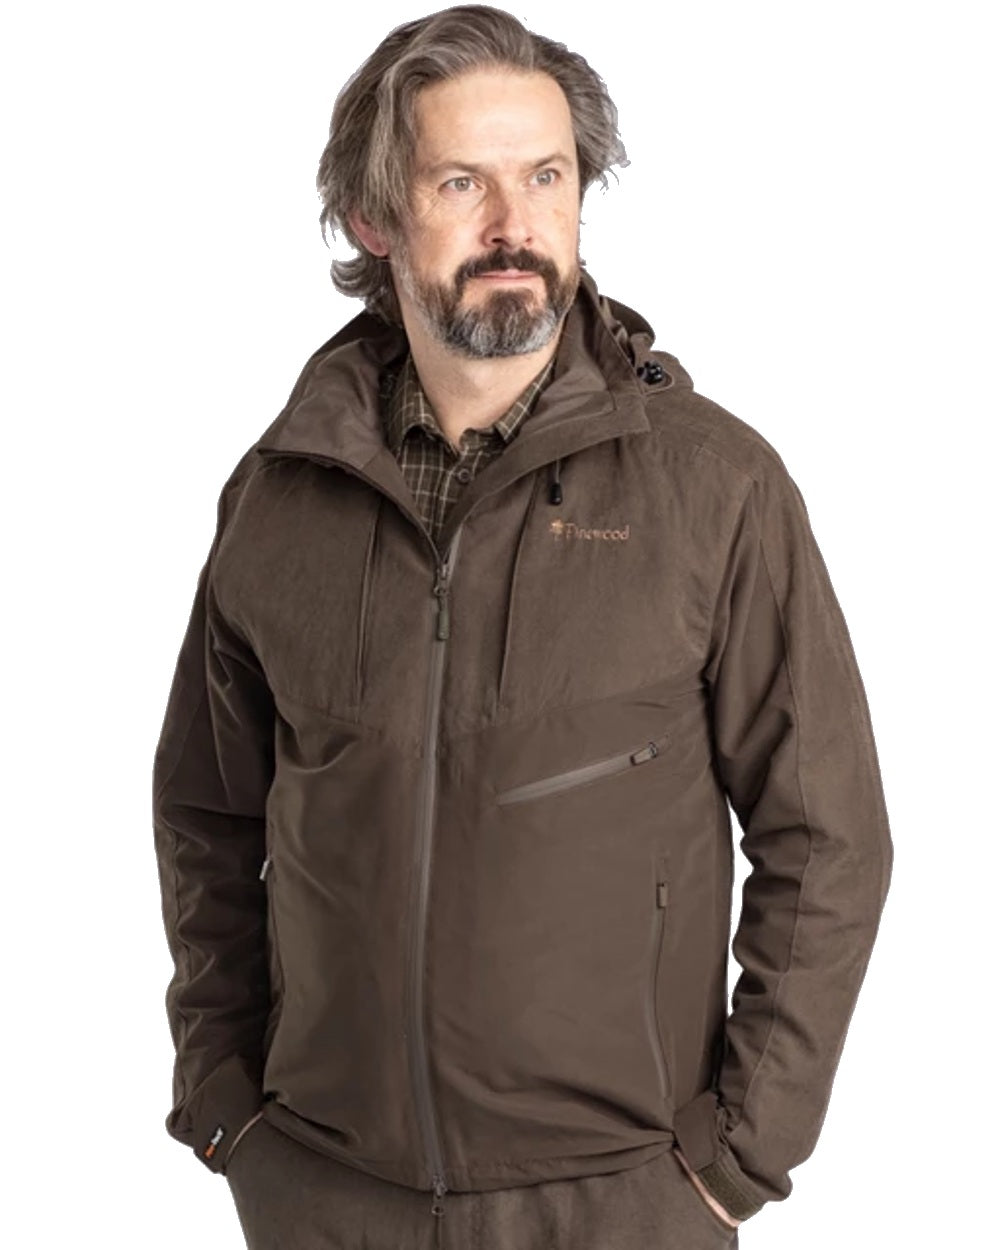 Pinewood Furudal Caribou Hunt Extreme Jacket in Suede Brown/Dark Olive